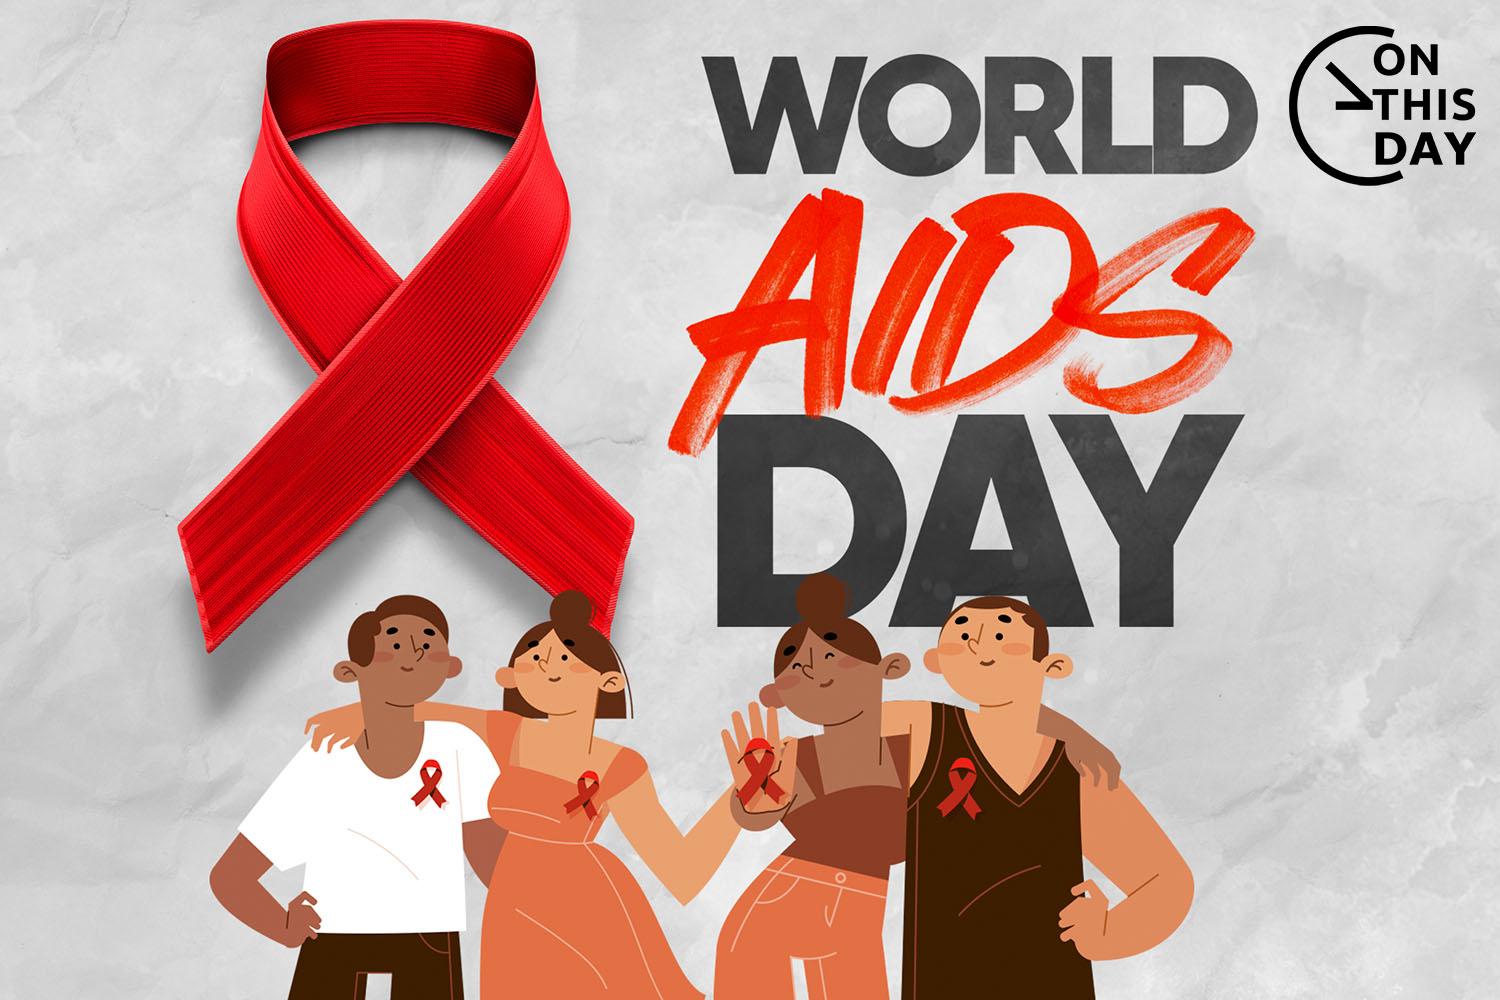 On-this-Day-World-aids-day-SPACEBAR-Hero.jpg